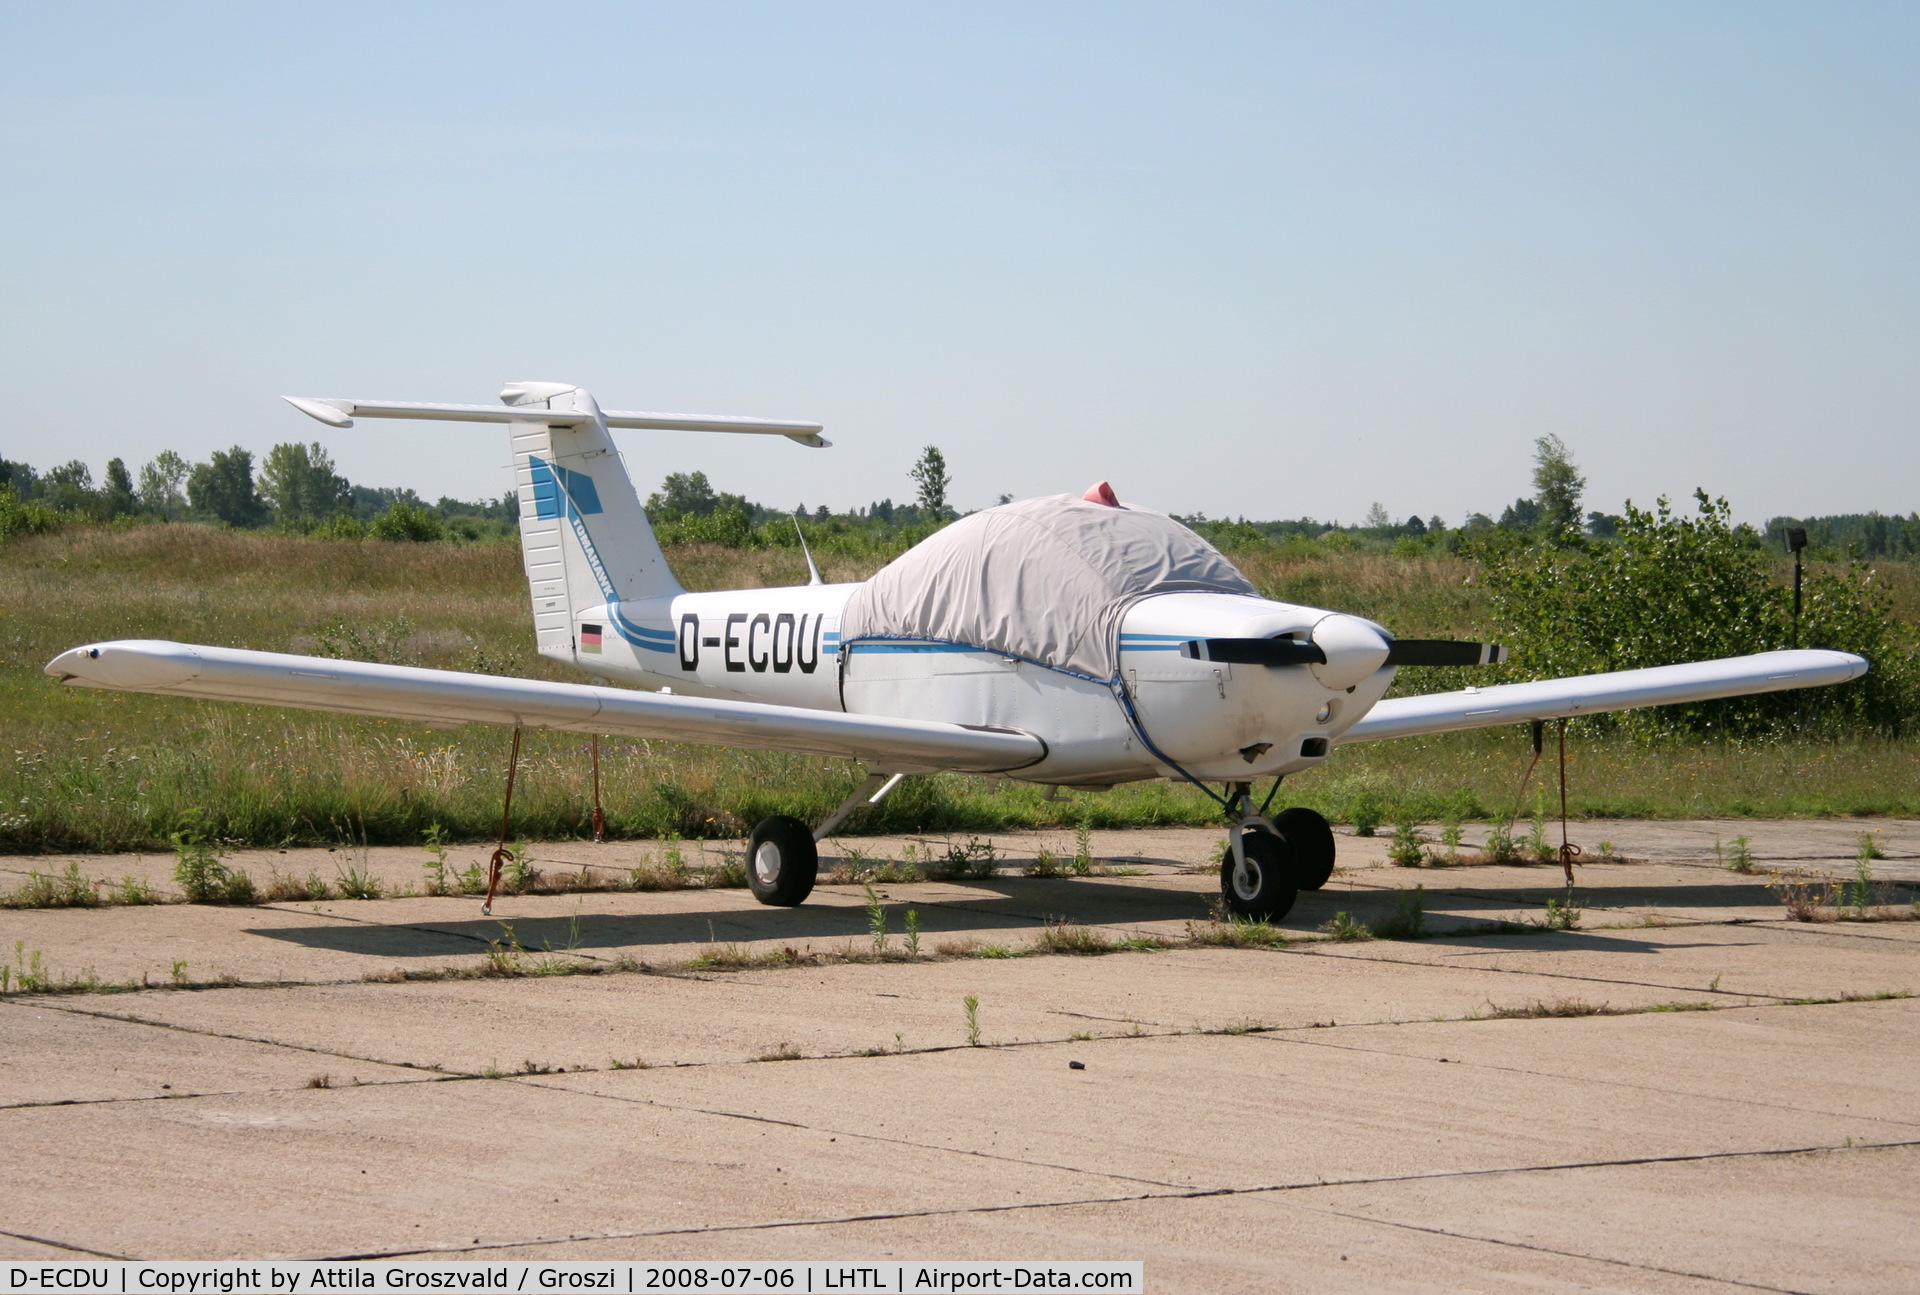 D-ECDU, 1979 Piper PA-38-112 Tomahawk Tomahawk C/N 38-80A0036, Tököl airport, Hungary. Ex N25140